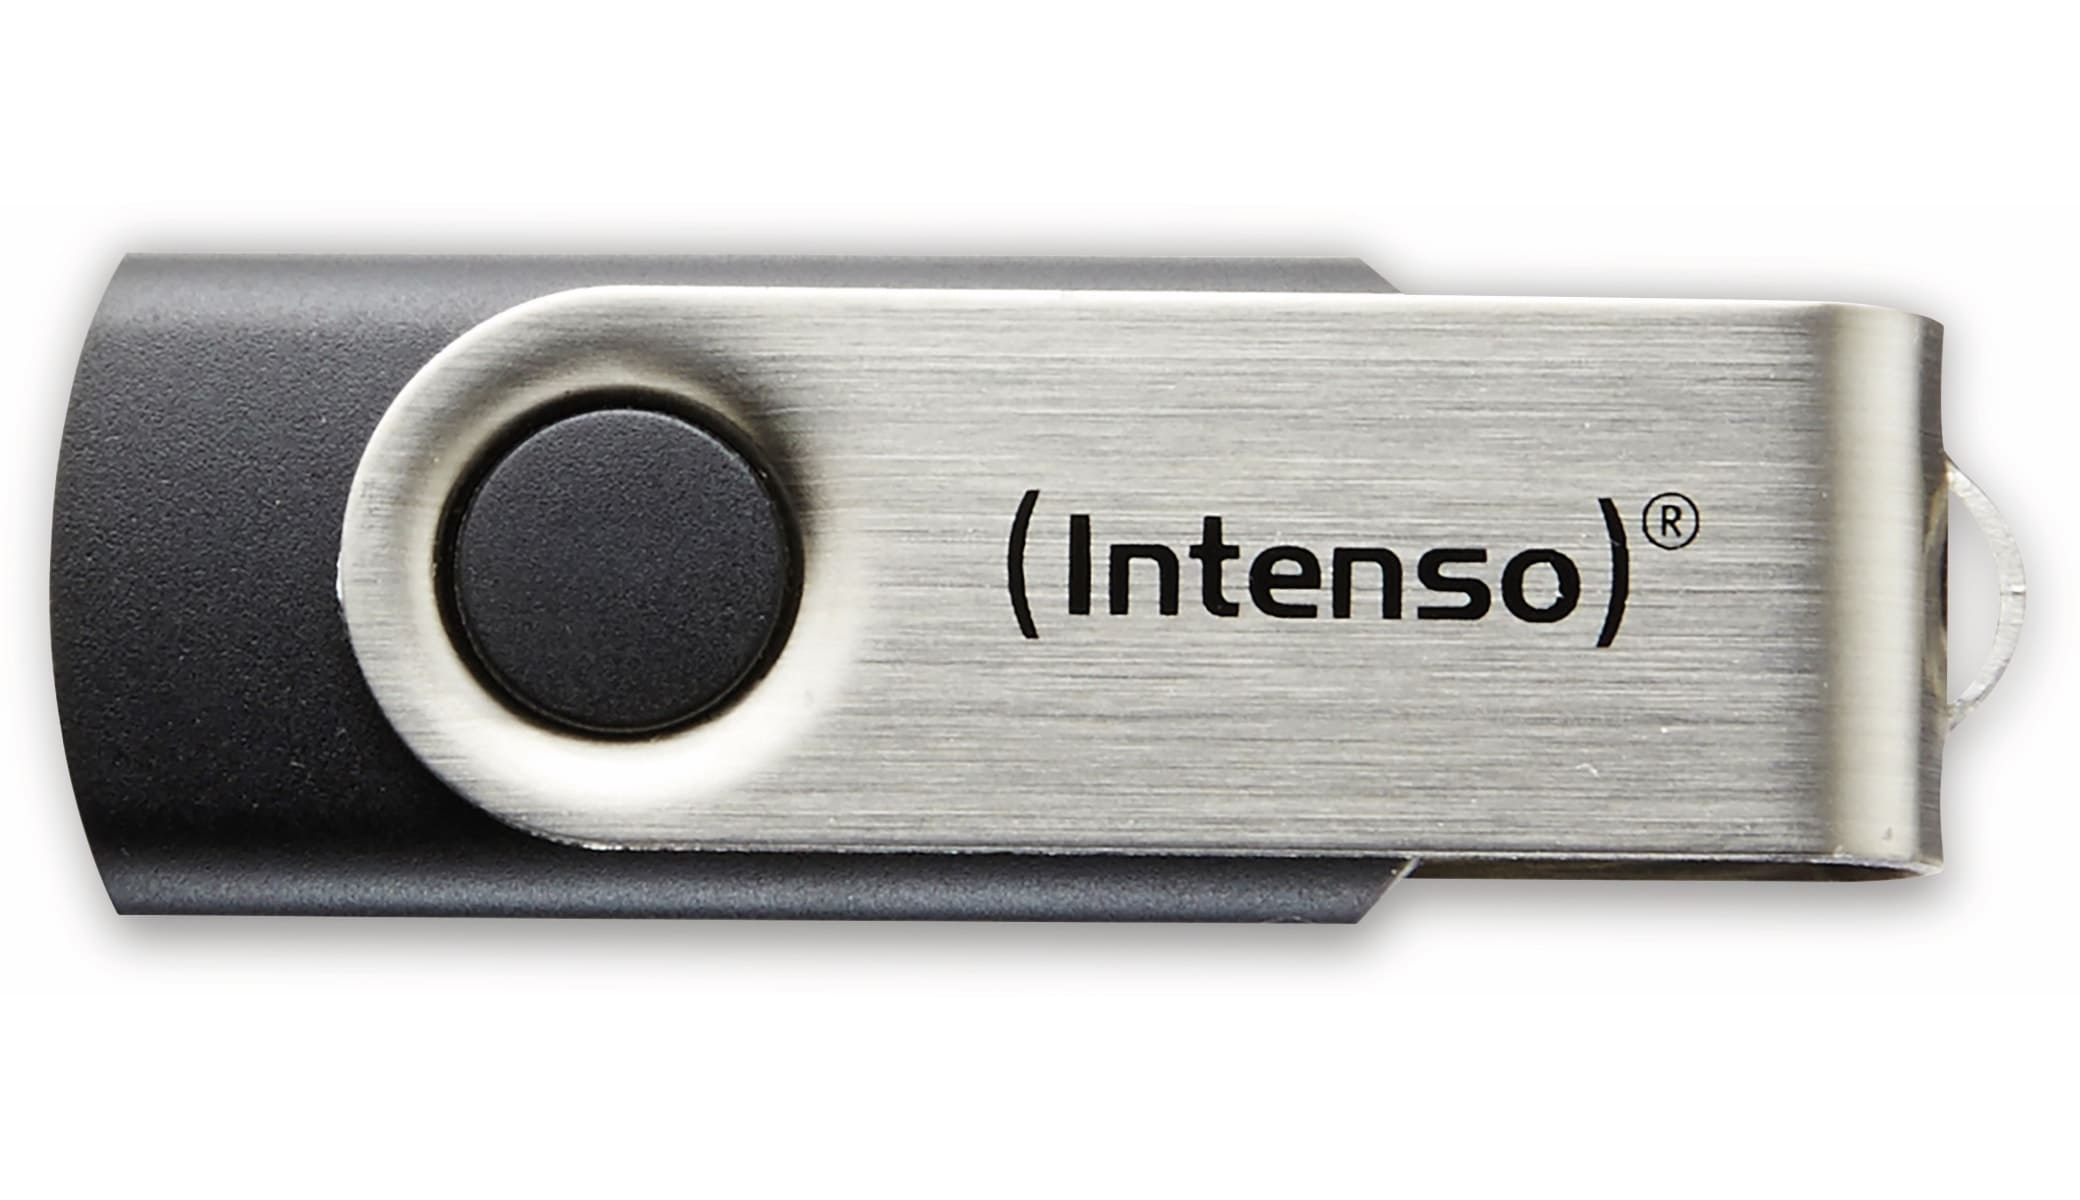 INTENSO USB-Speicherstick BasicLine, 8 GB